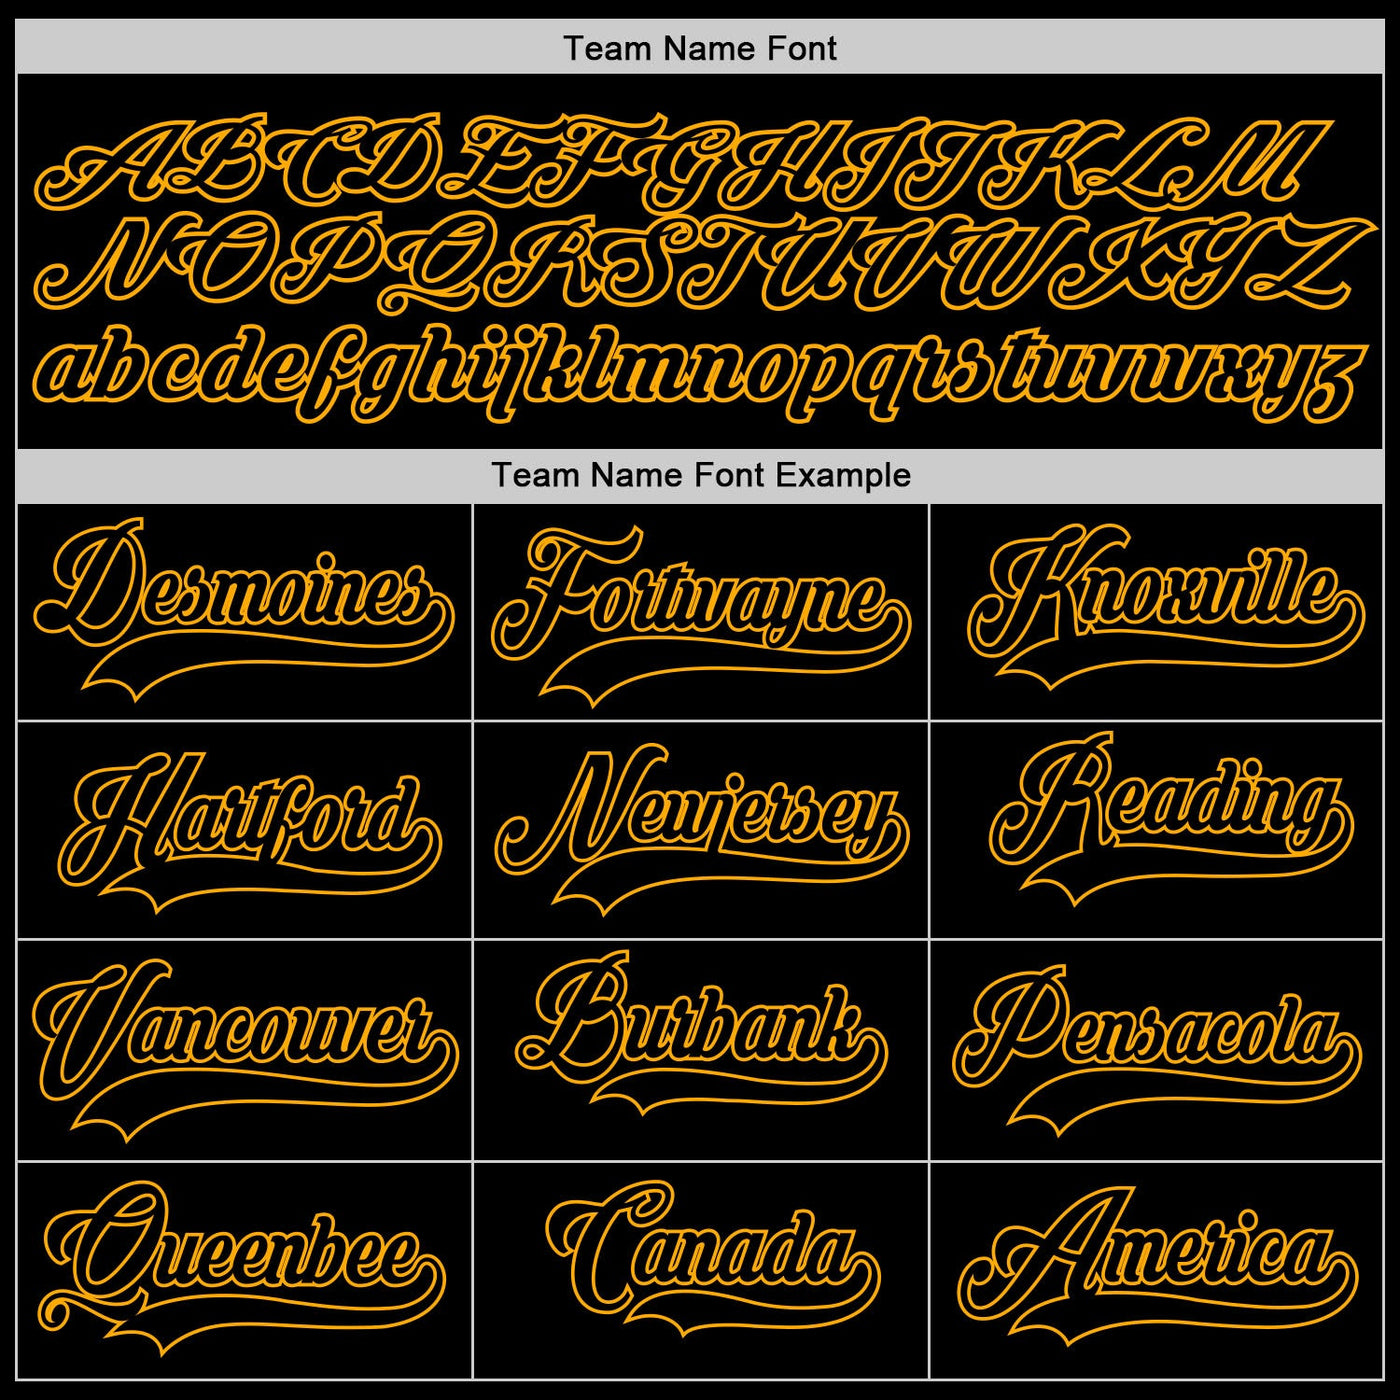 Custom Black Black-Gold Authentic Baseball Jersey - Owls Matrix LTD